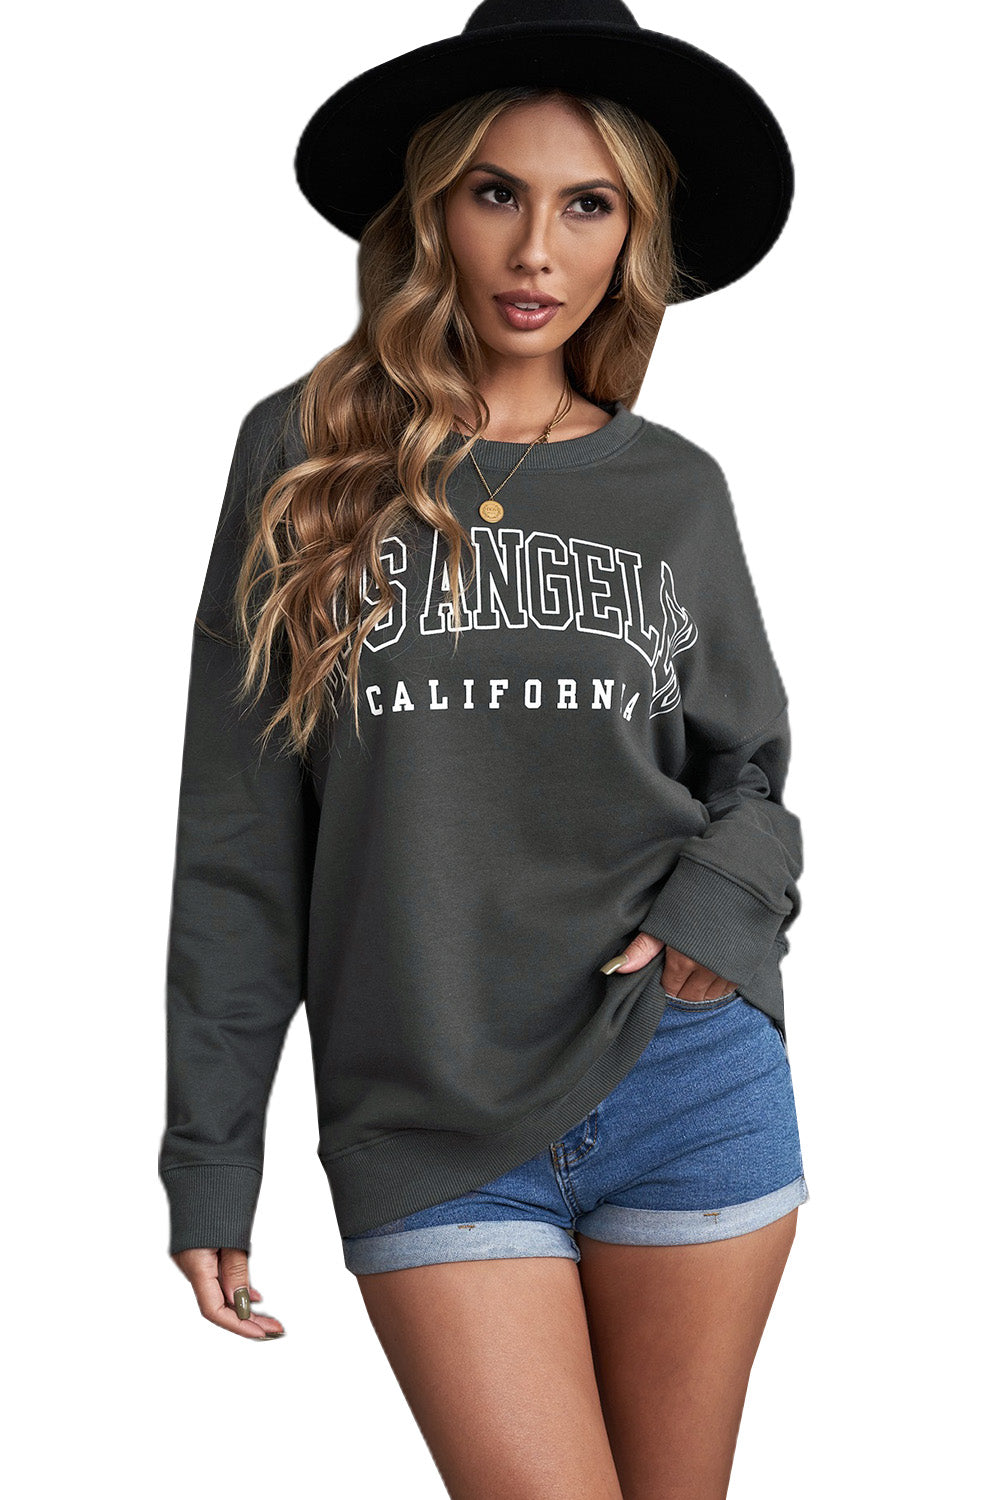 Cali Chic Women Sweatshirt Celebrity Los Angeles Graphic Design Gray Letter Print